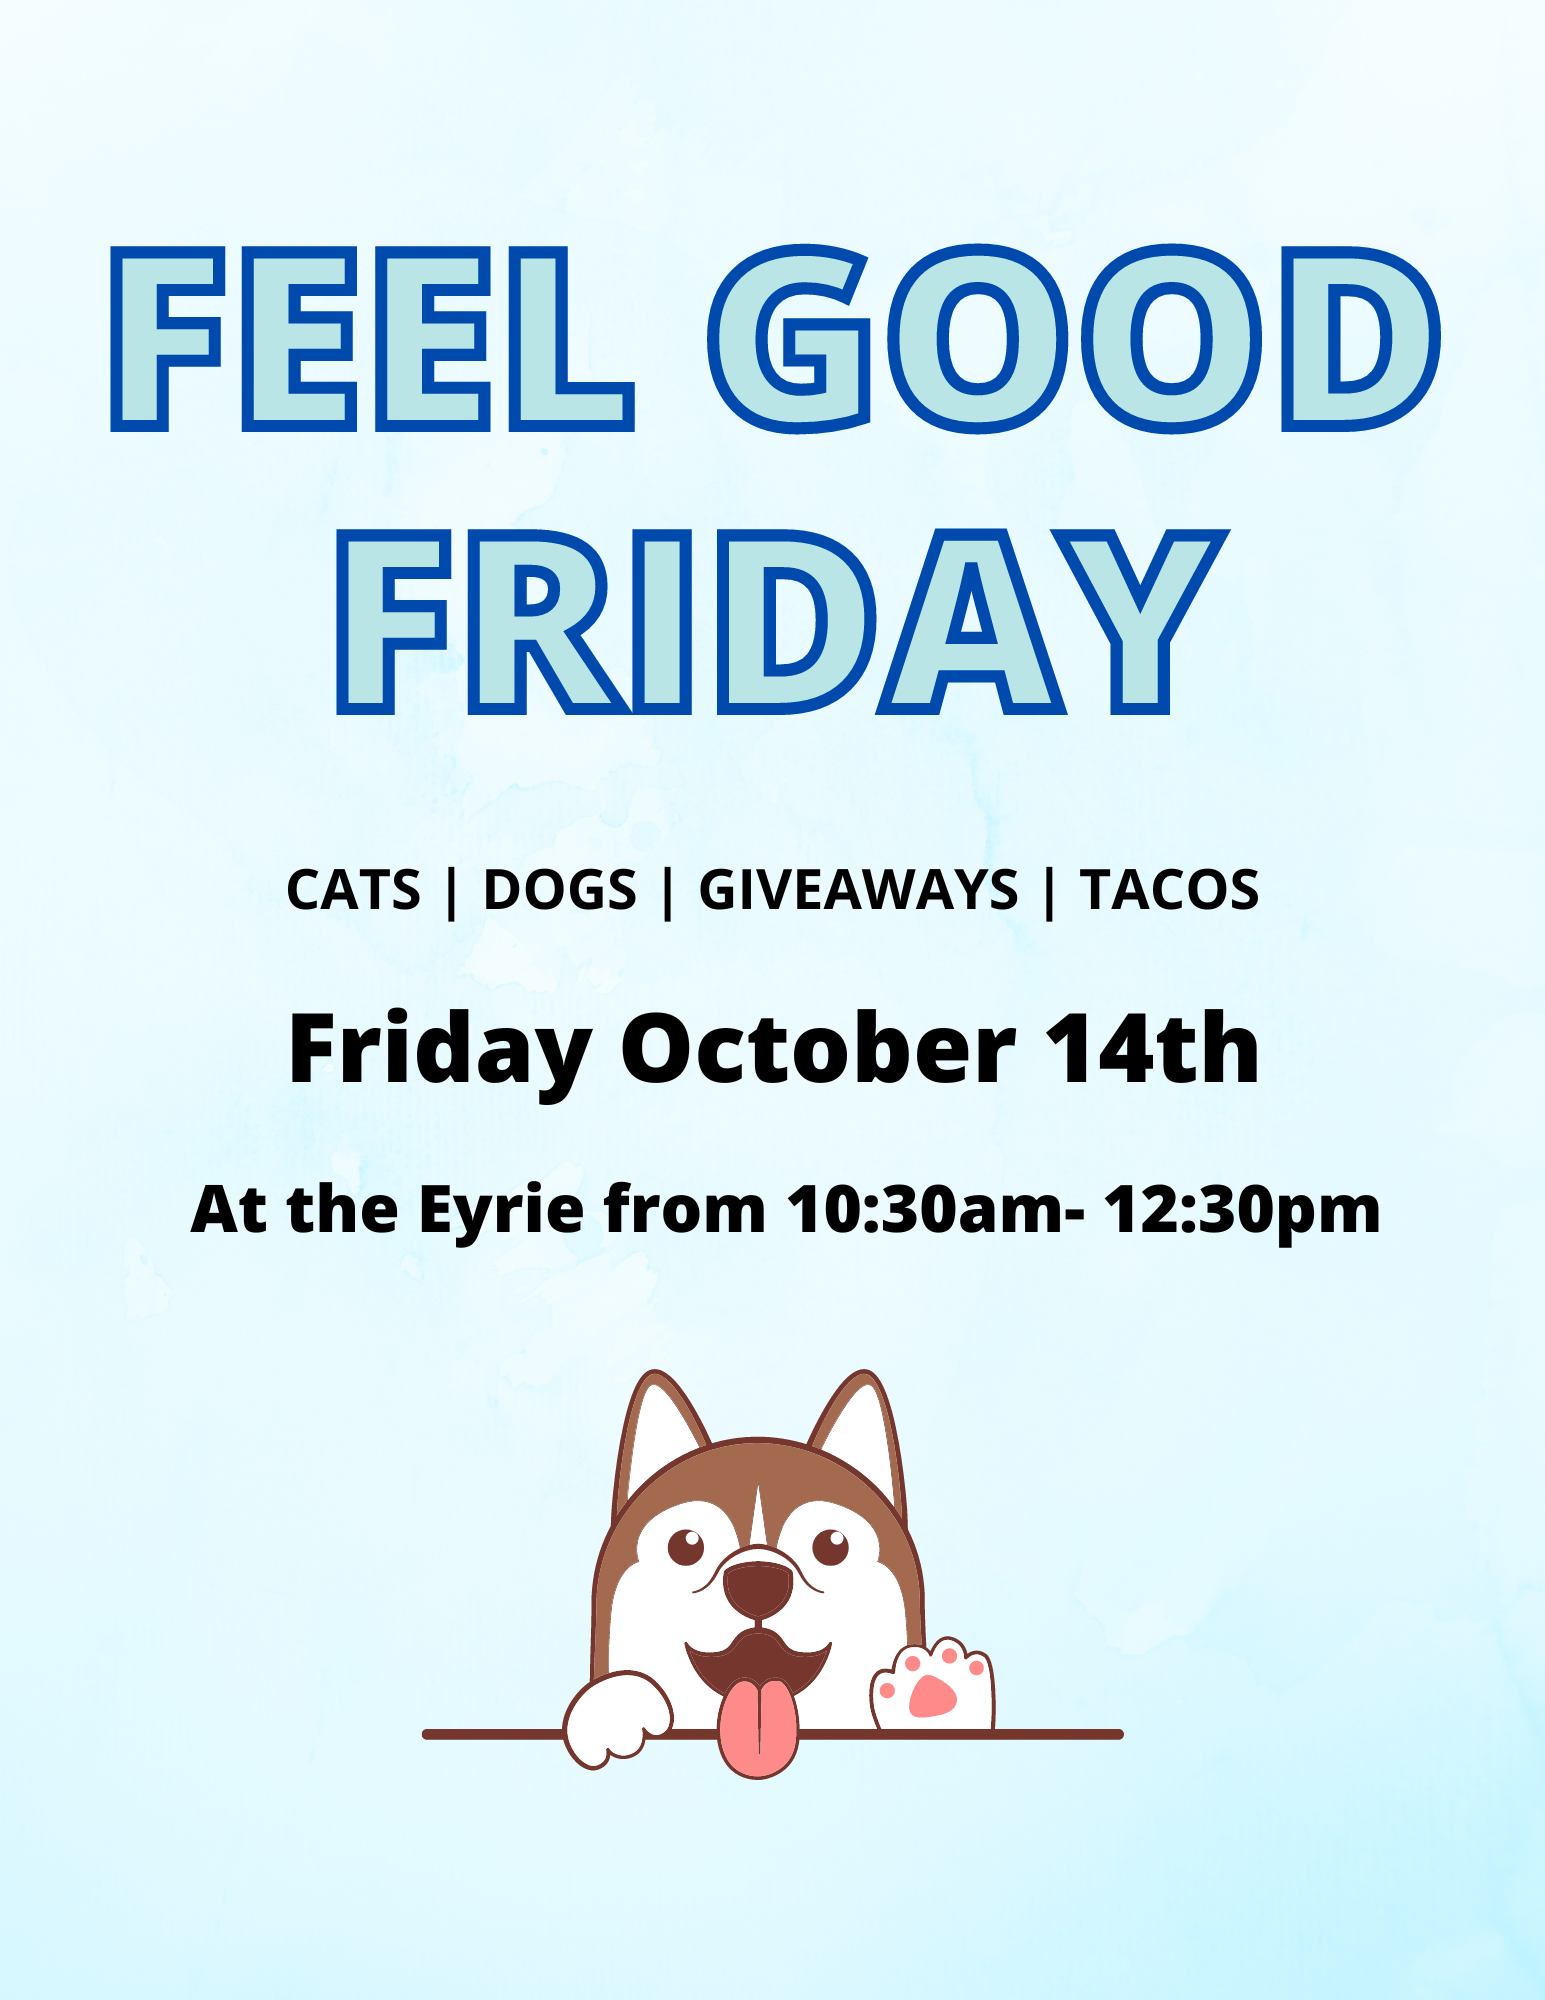 Feel Good Friday | Carson-Newman University